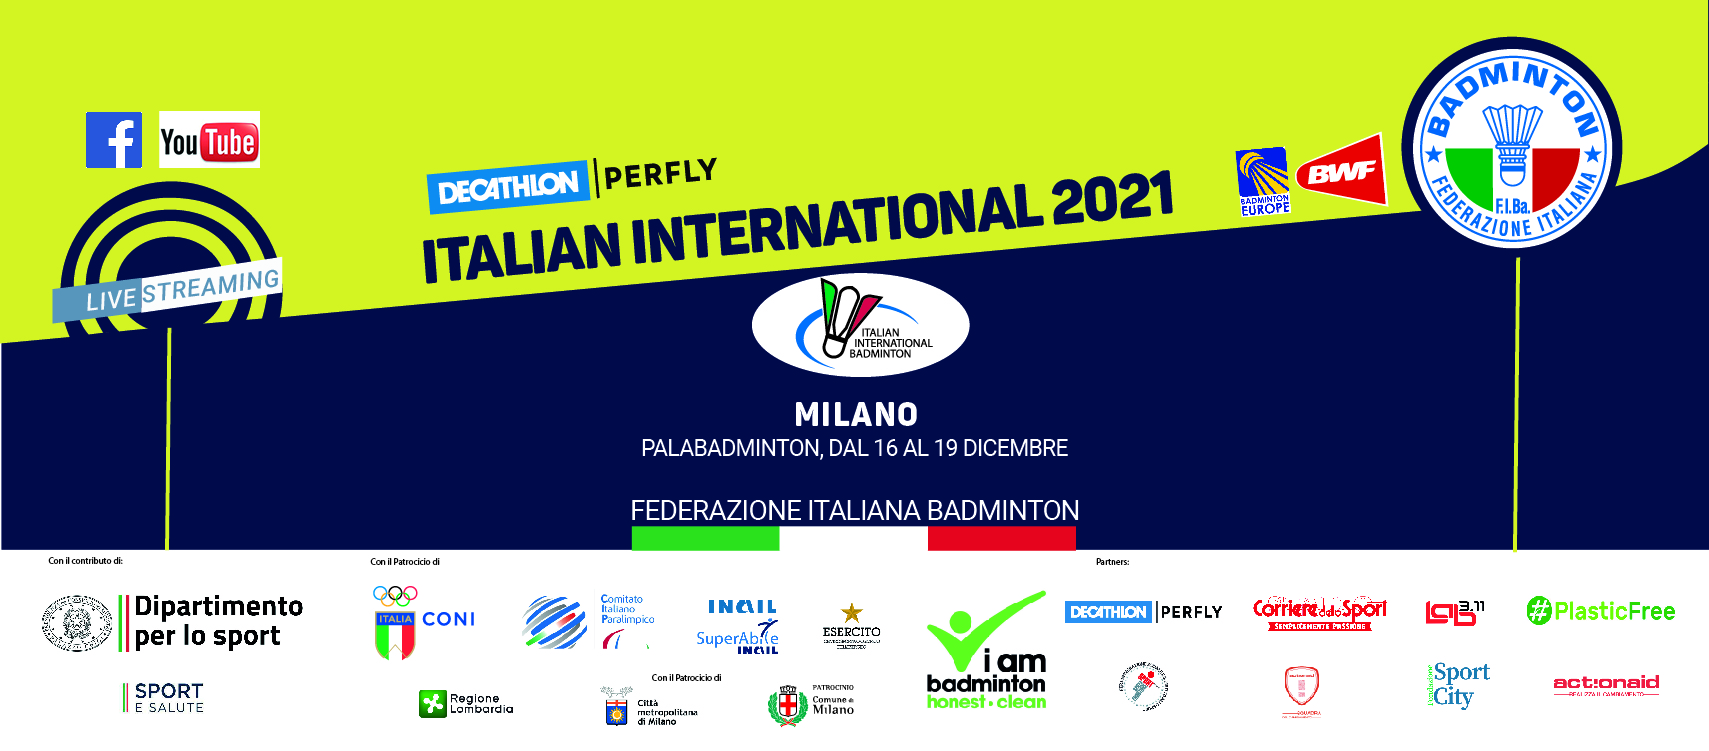 DECATHLON PERFLY ITALIAN INTERNATIONAL 2021